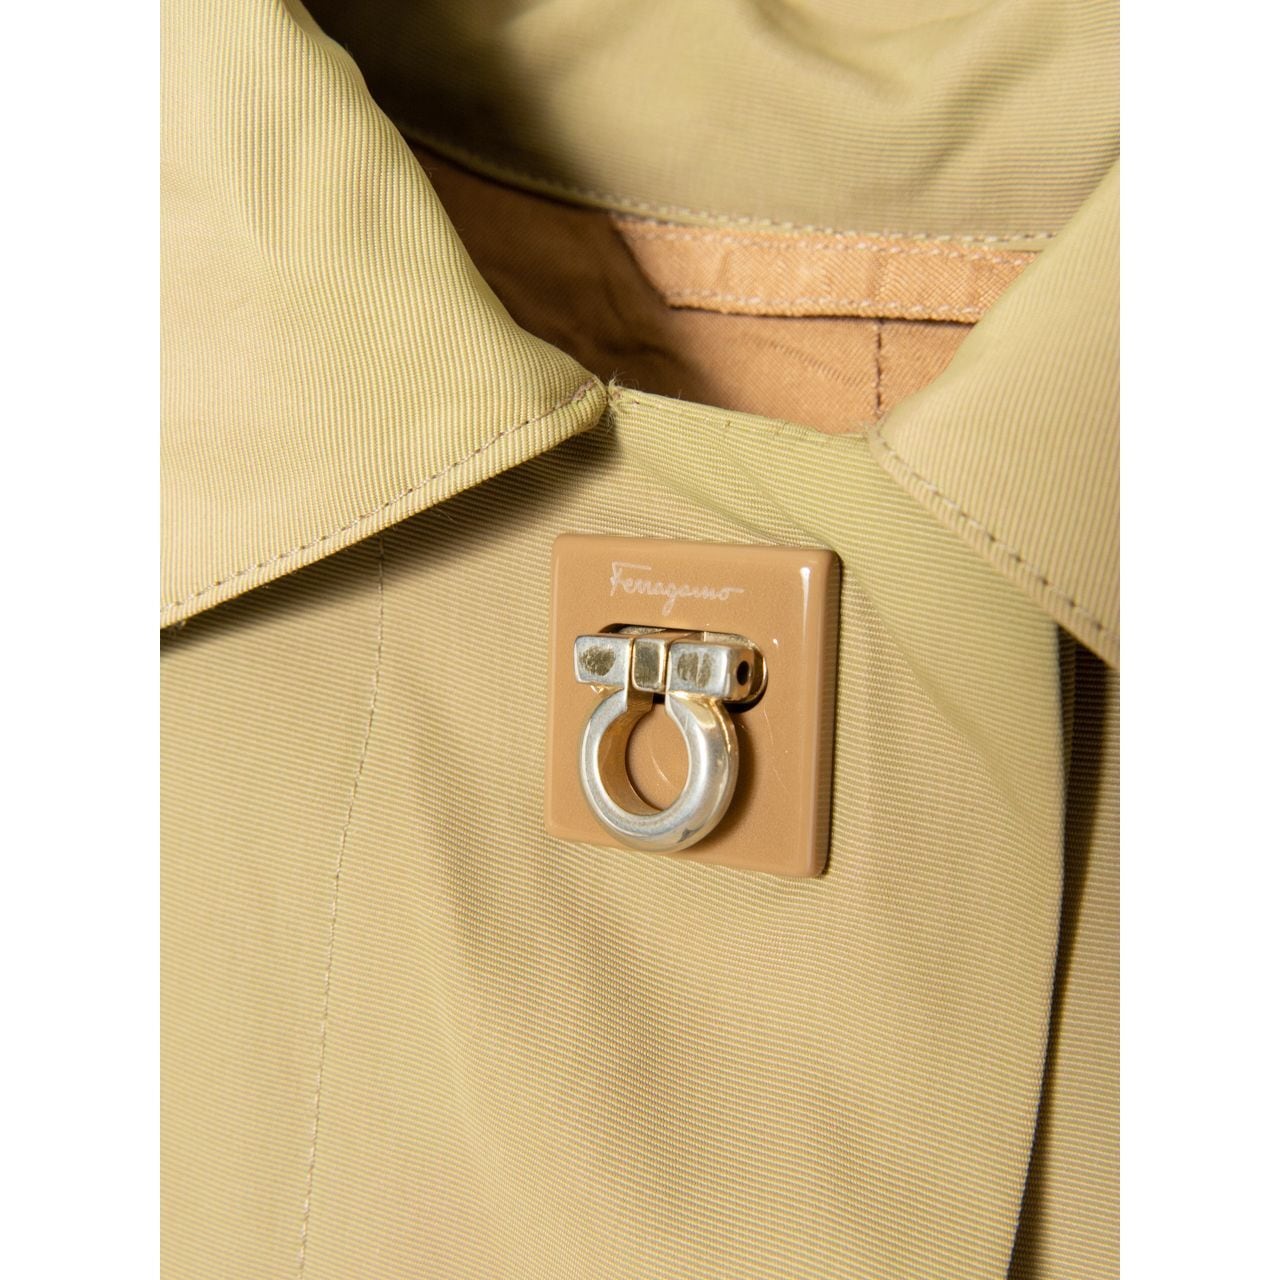 Salvatore Ferragamo】Made in Italy oversized soutien collar coat